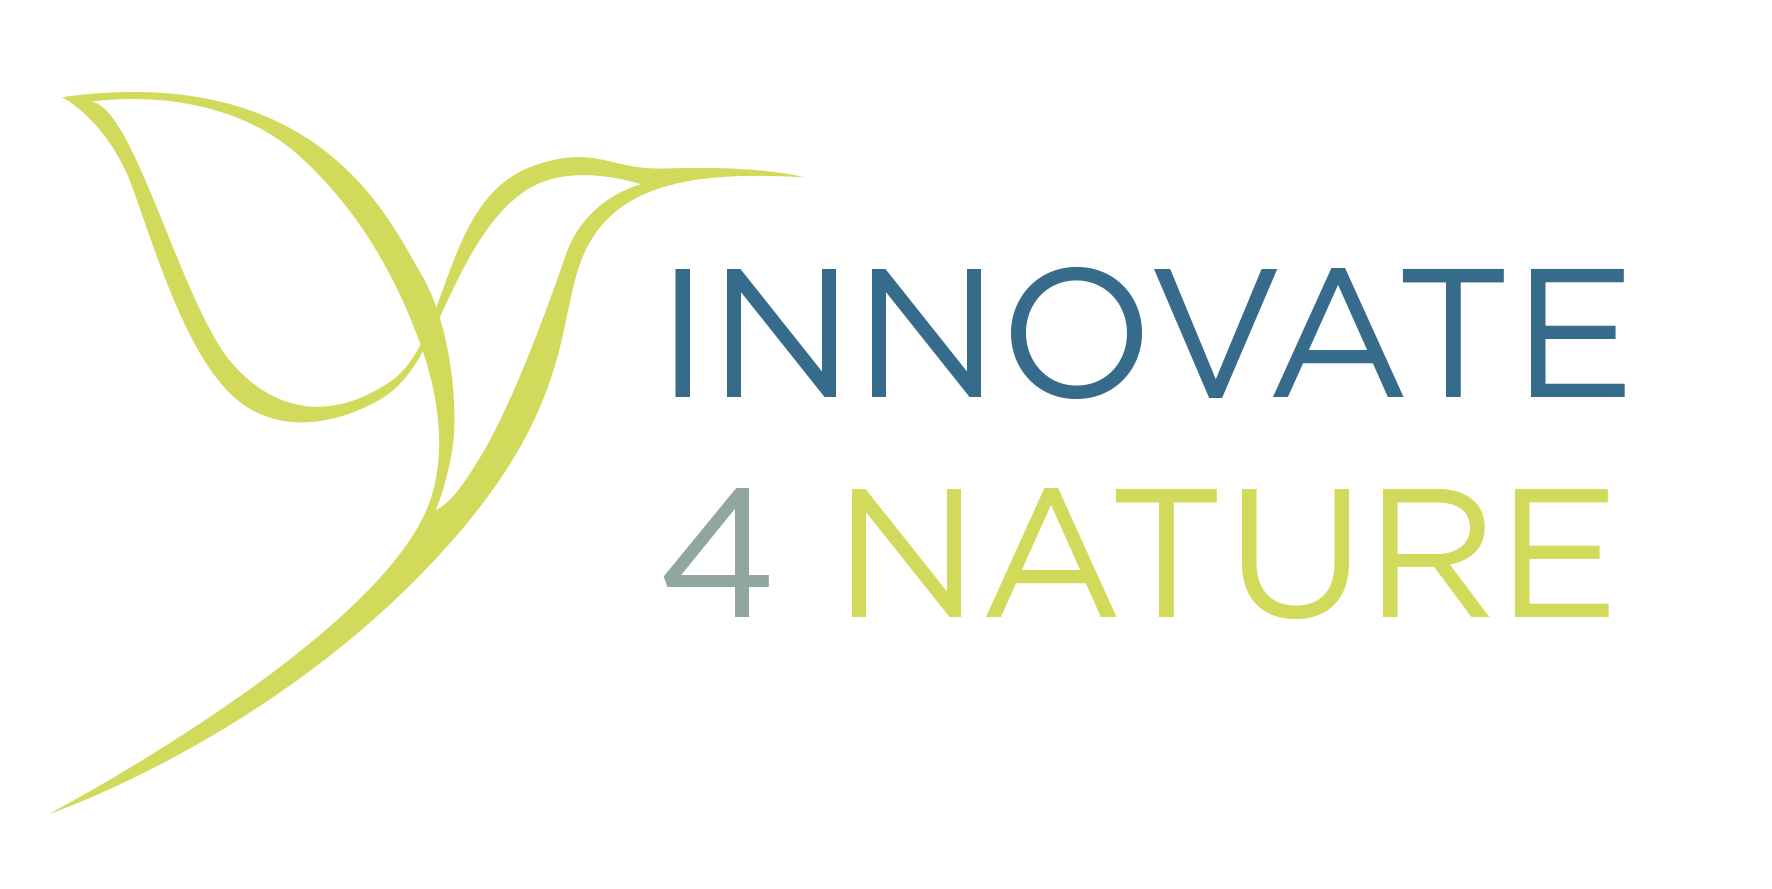 Innovate 4 Nature, April 5